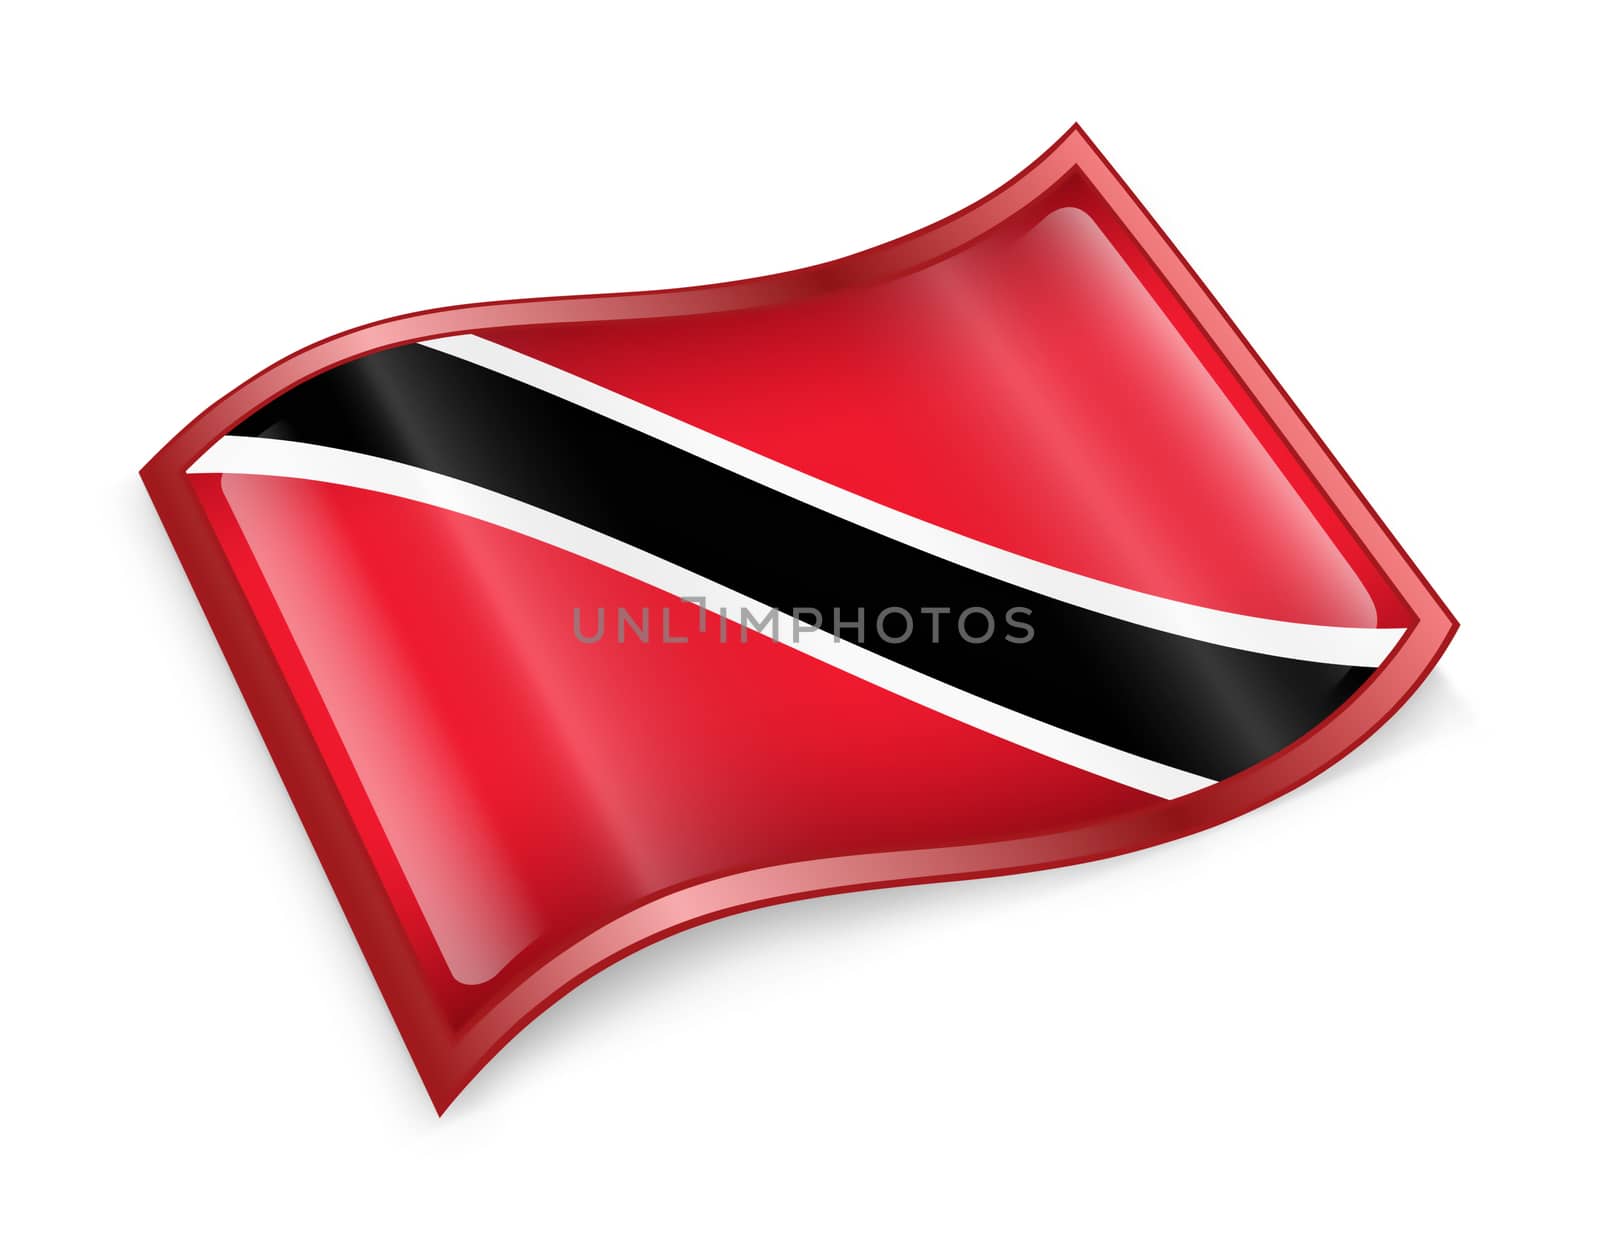 Trinidad and Tobago Flag icon, isolated on white background.